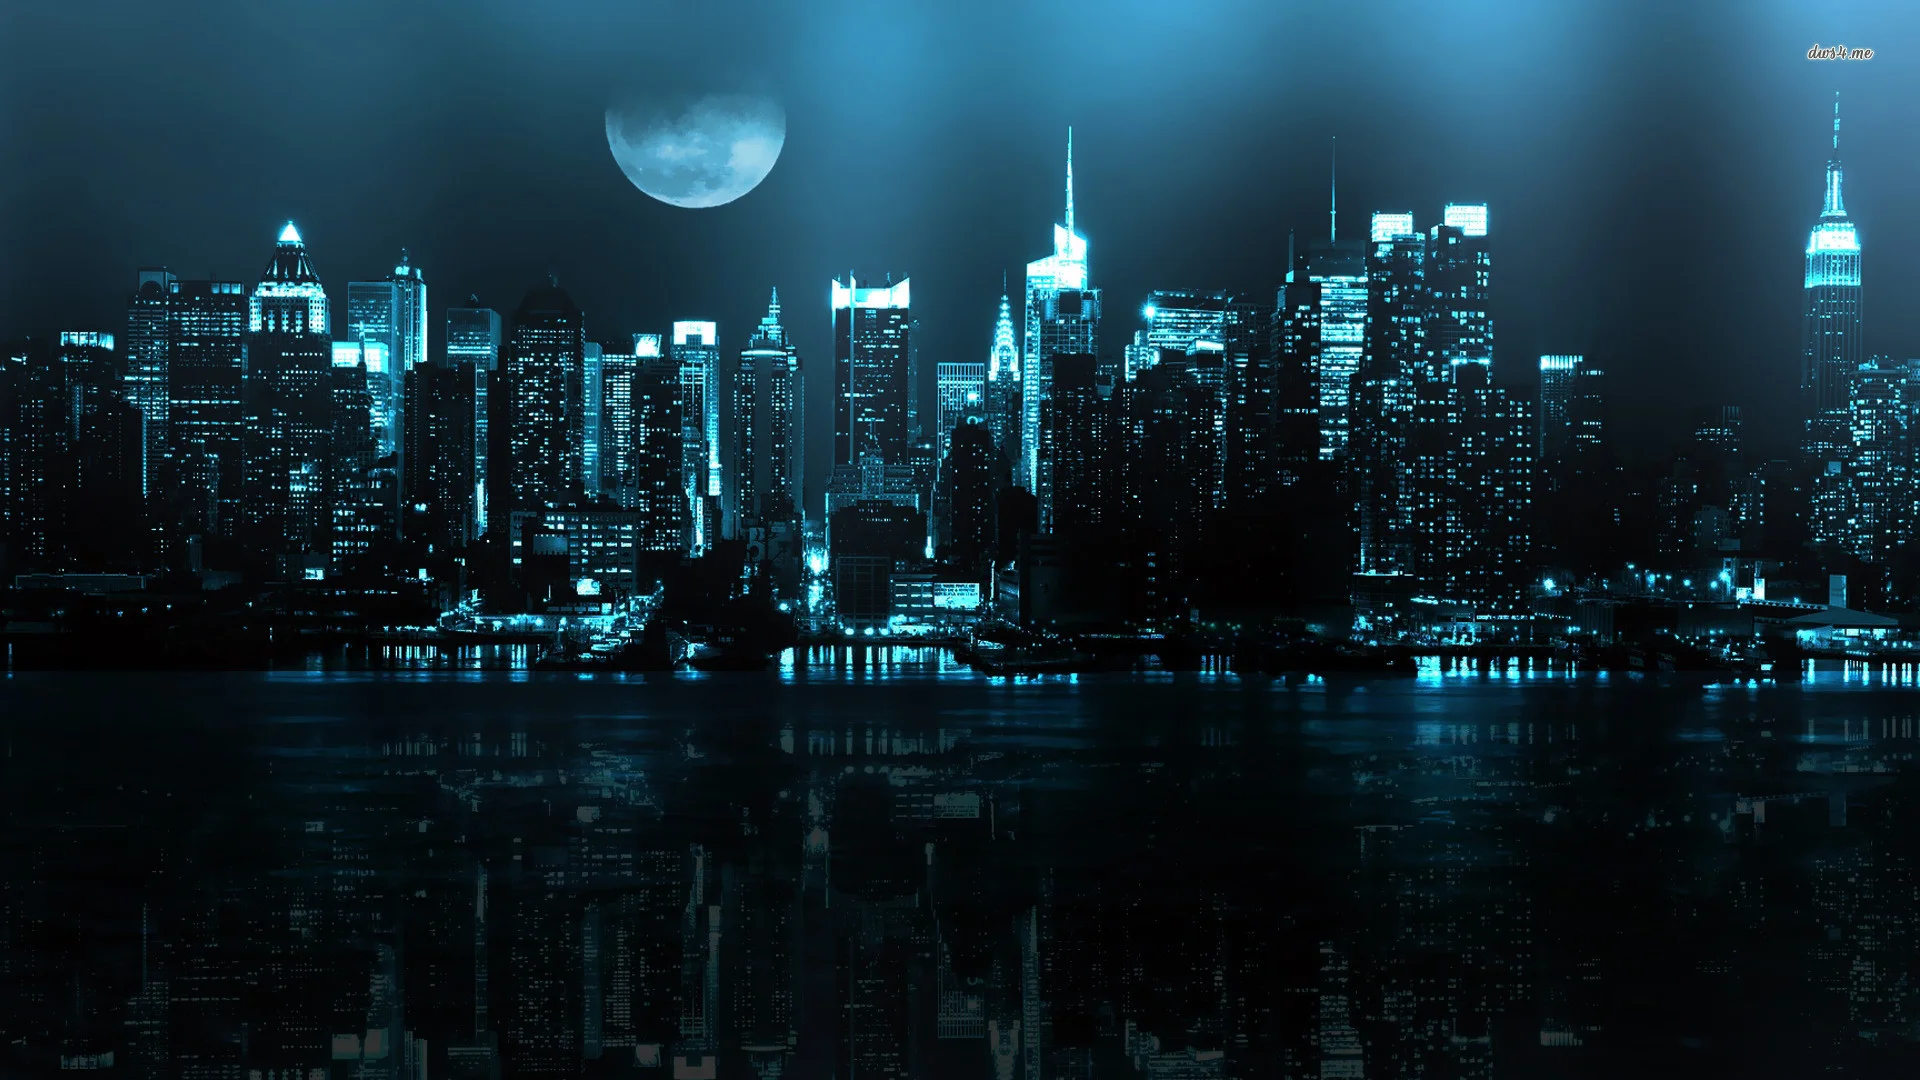 4464-new-york-city-1920×1080-world-wallpaper.jpg (1920Ã1080) | Night With  Moolight | Pinterest